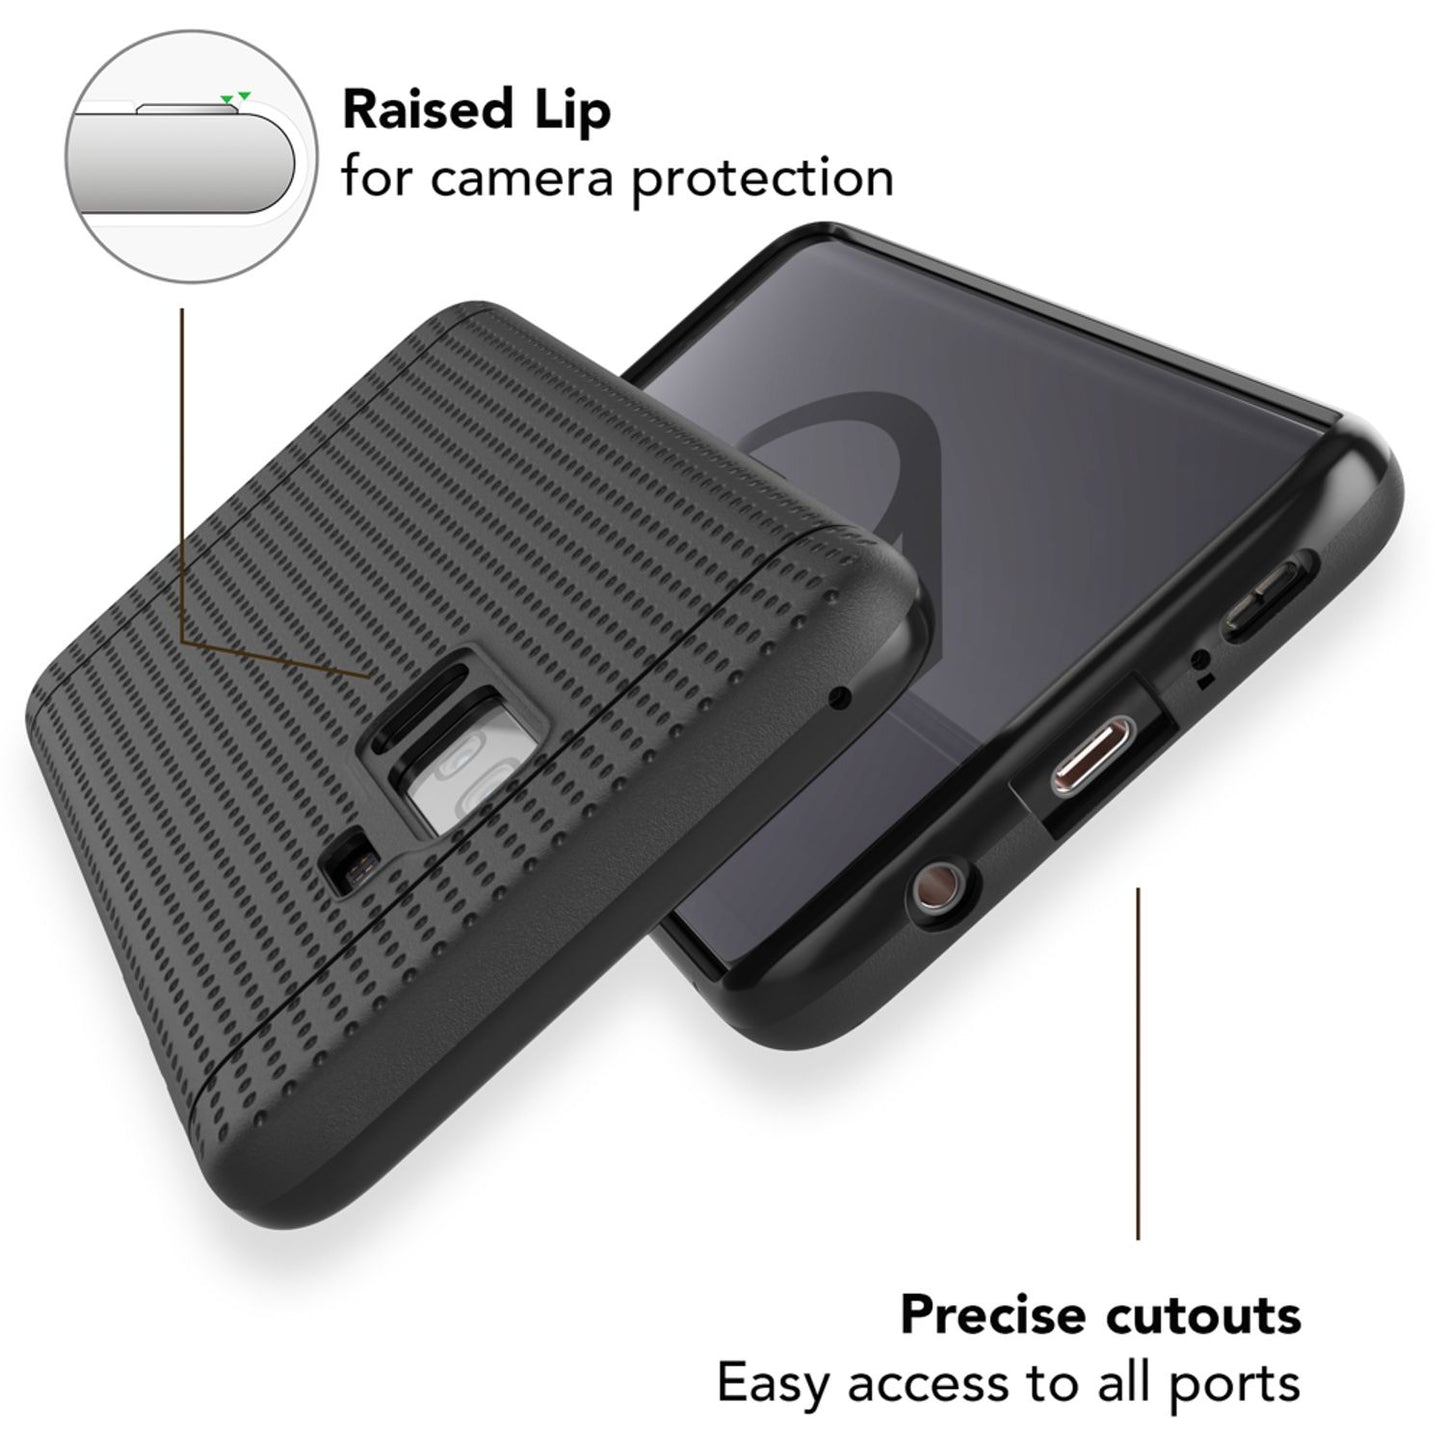 Samsung Galaxy S9 Plus Handy Hülle von NALIA, Silikon Cover Case Punkte Bumper